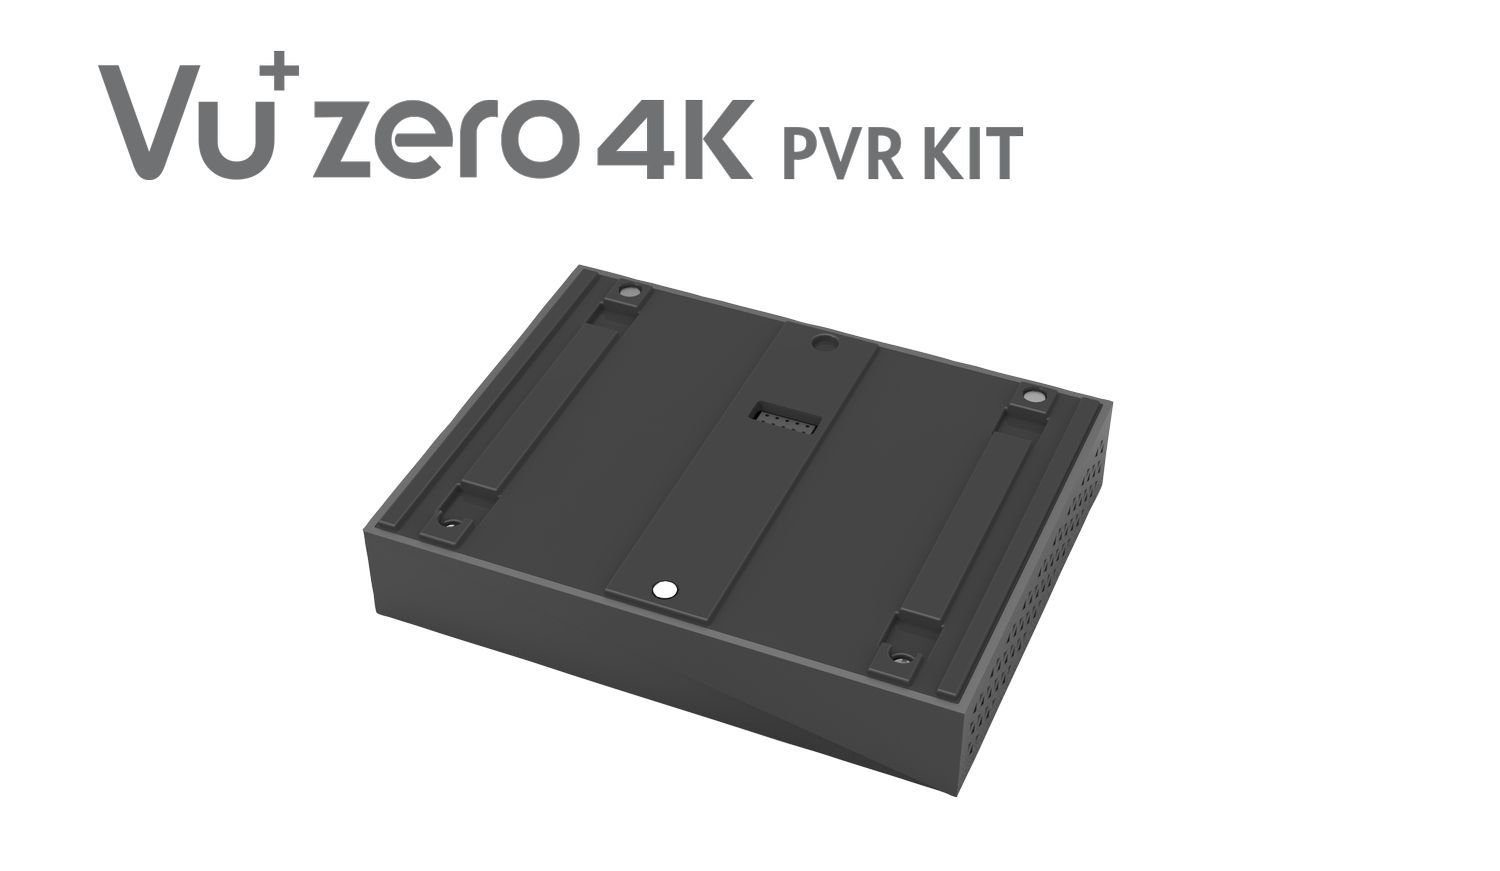 Zero 4K 2TB, Tuner Kit HDD, VU+ schwarz VU+ Inklusive PVR